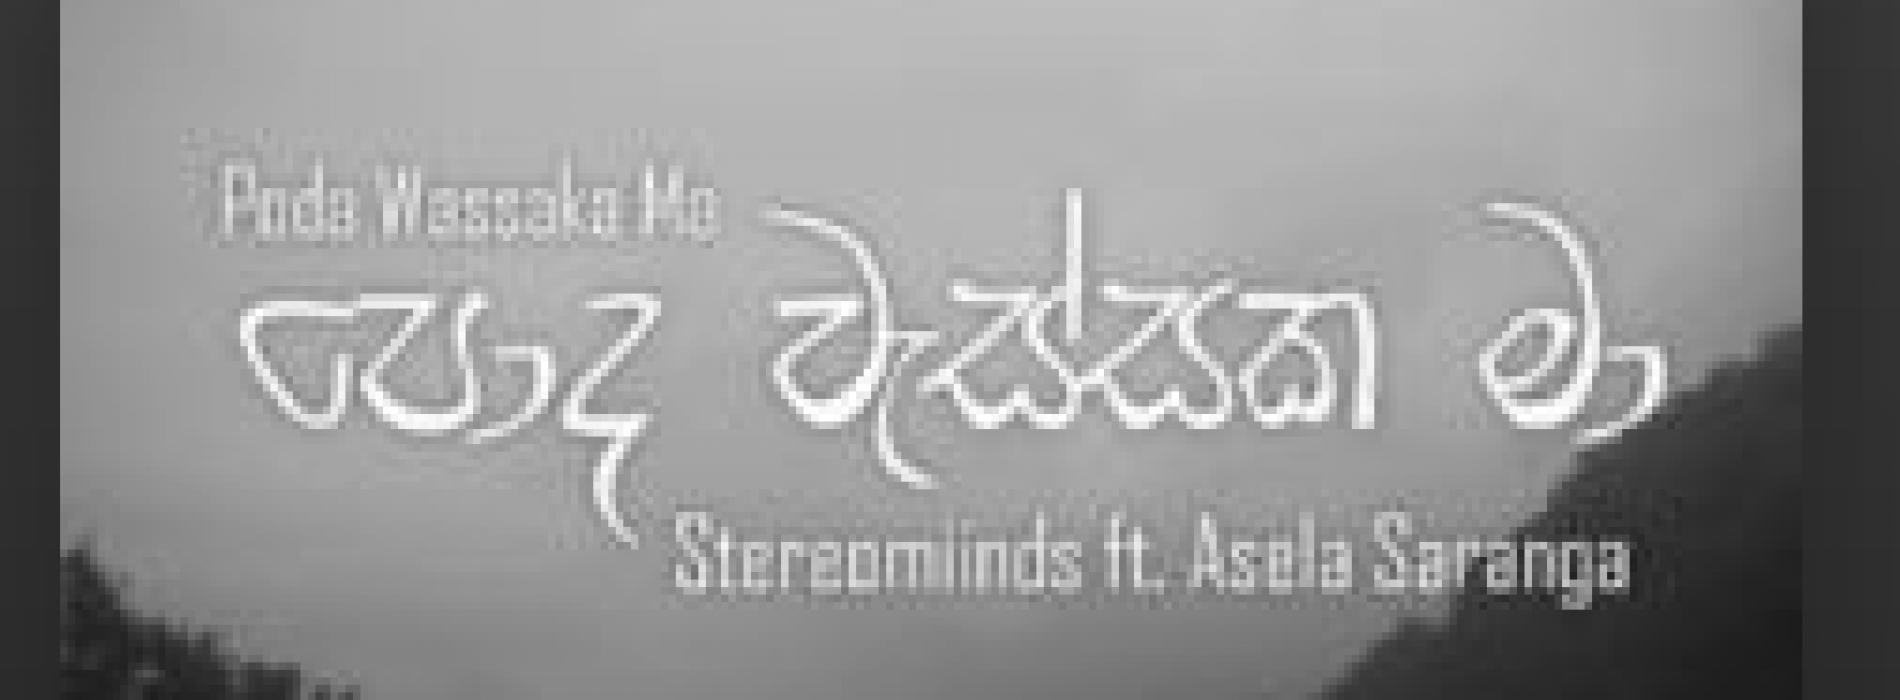 New Music : Stereomiinds x Asela Saranga – Poda Wassaka Ma